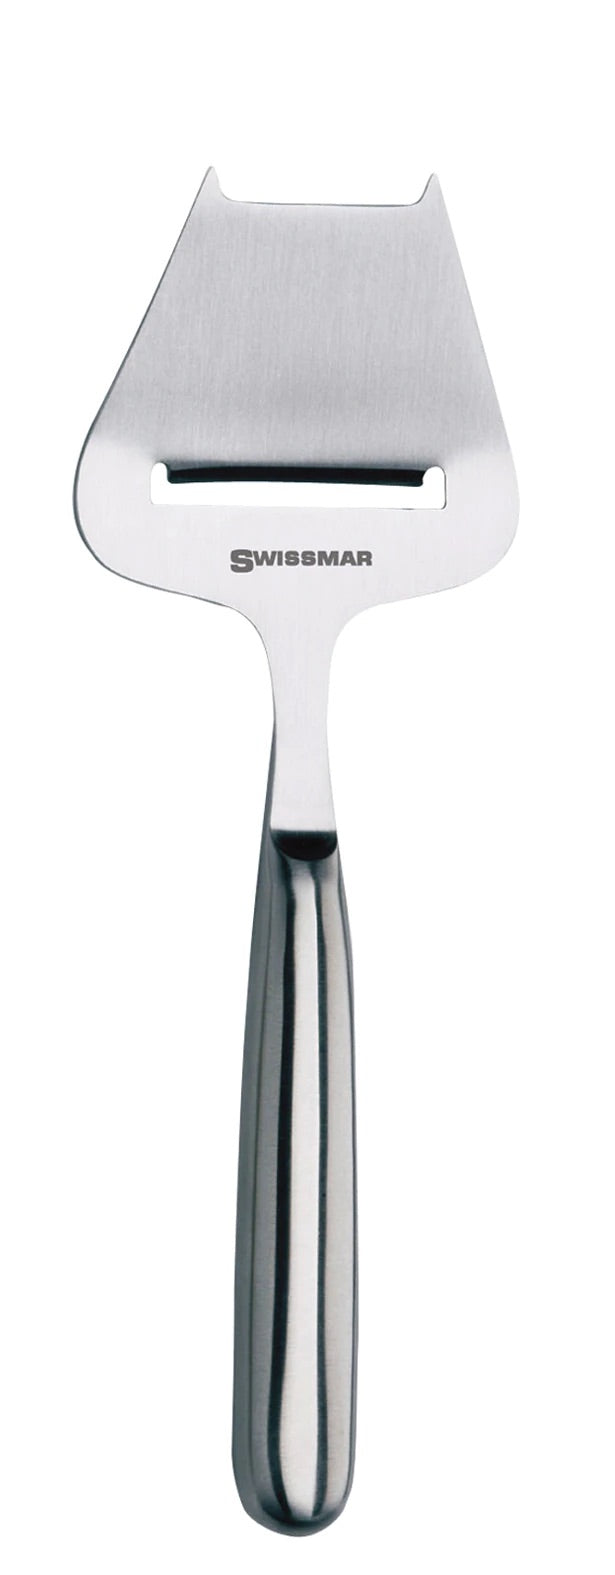 Swissmar - Cheese Knife | Plane | Stainless Steel